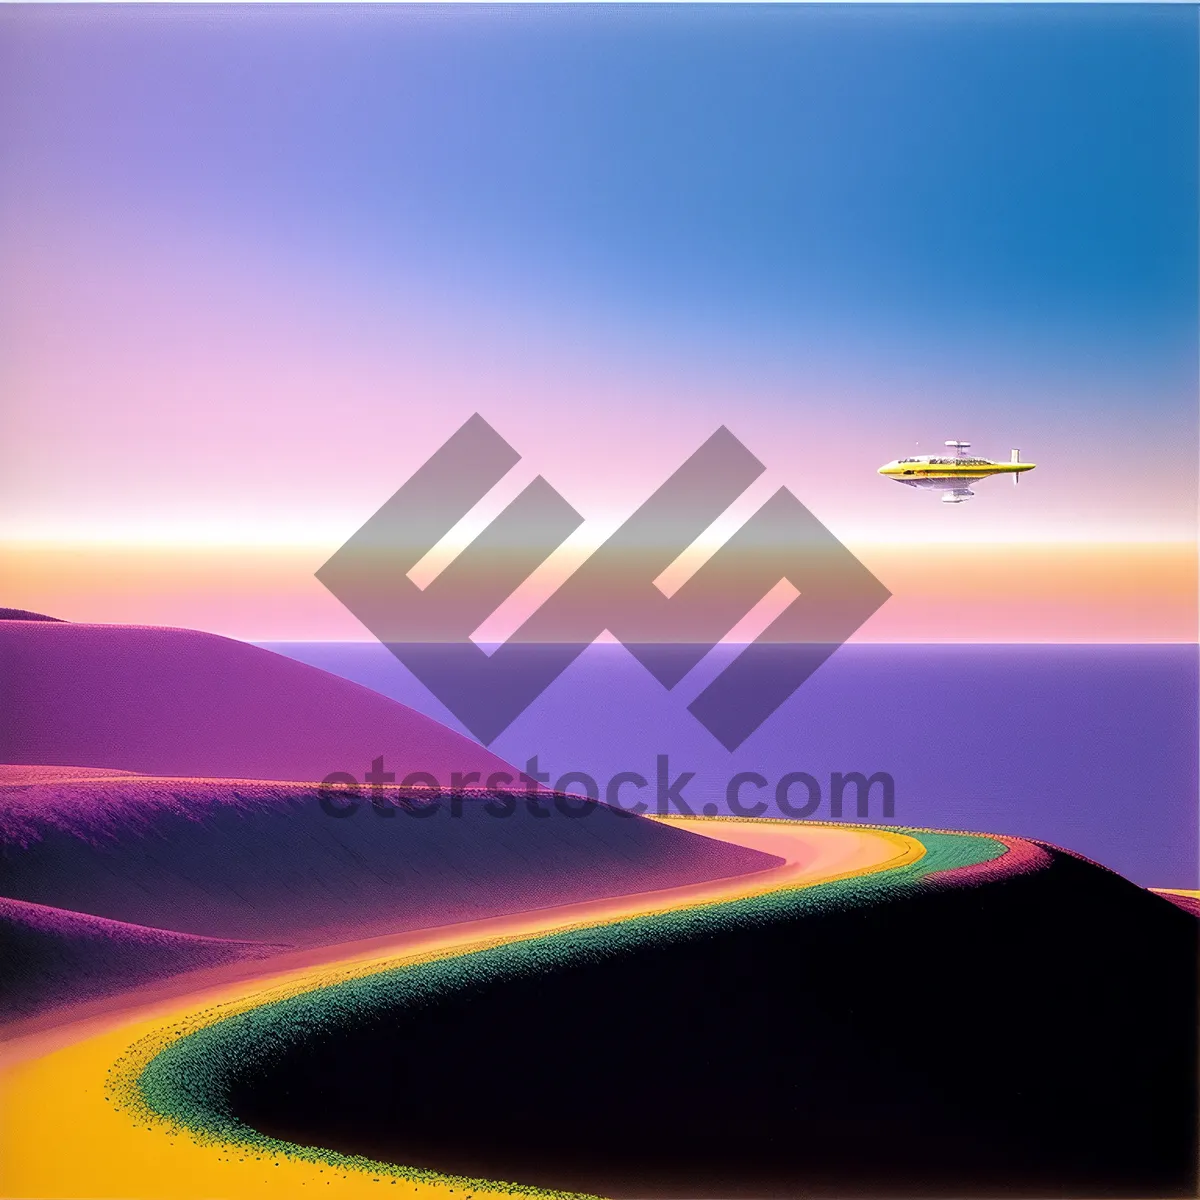 Picture of Sunset Wing Soaring over Desert Landscape